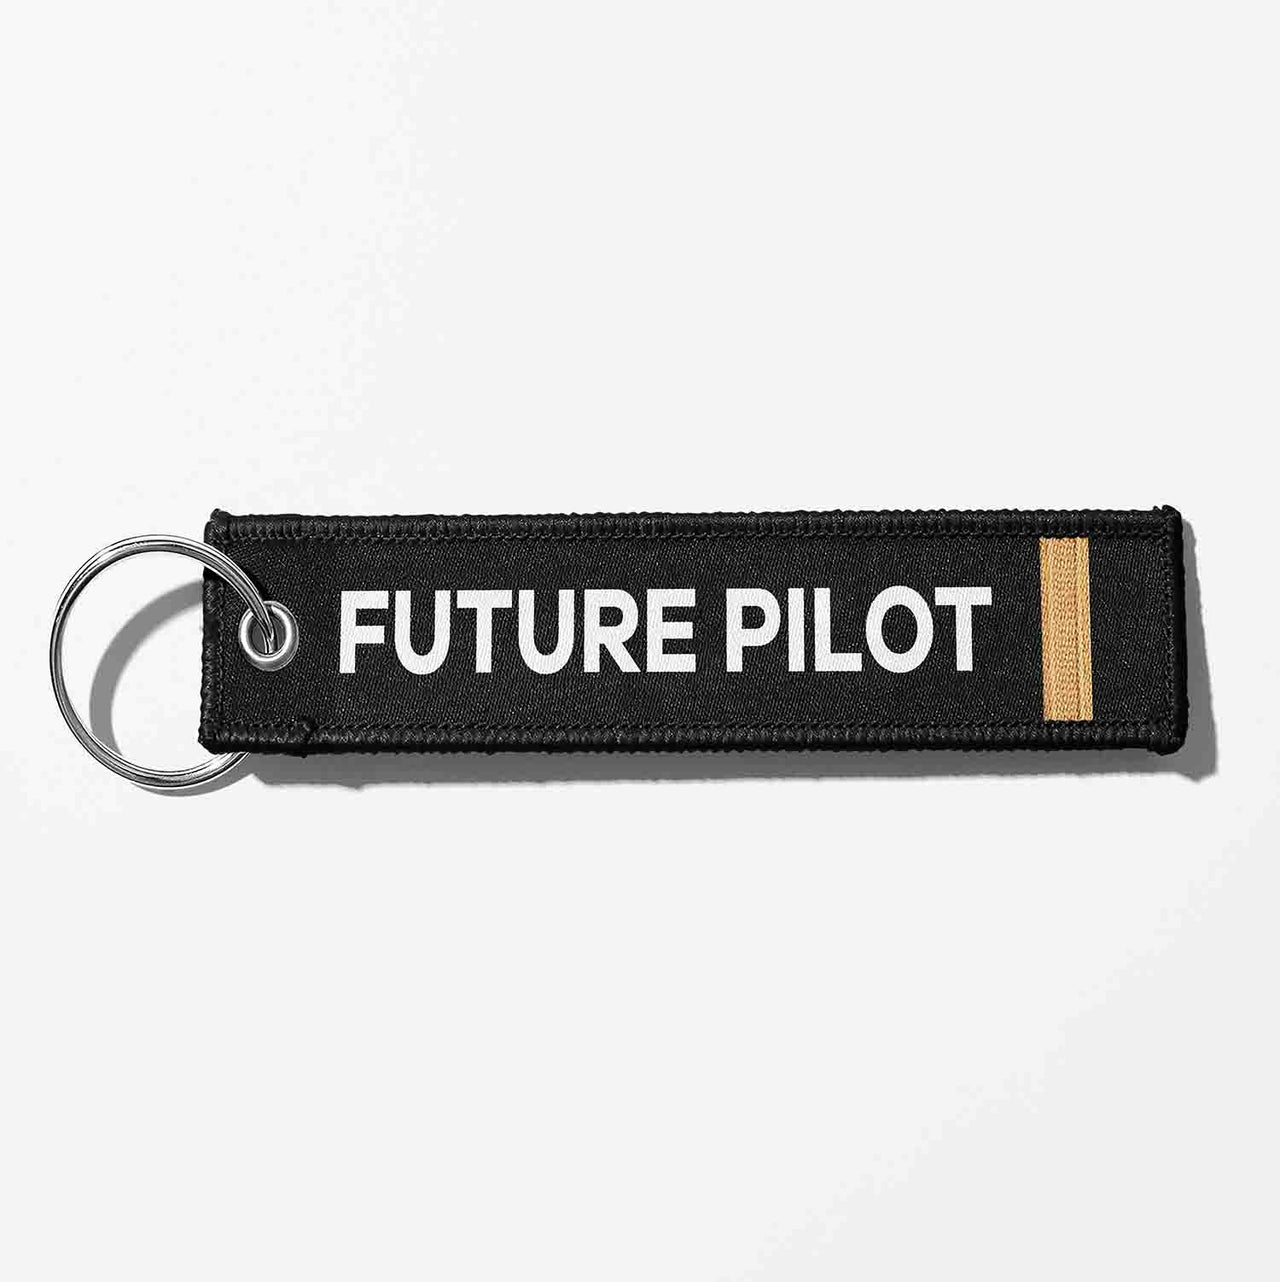 Future Pilot Designed Key Chains